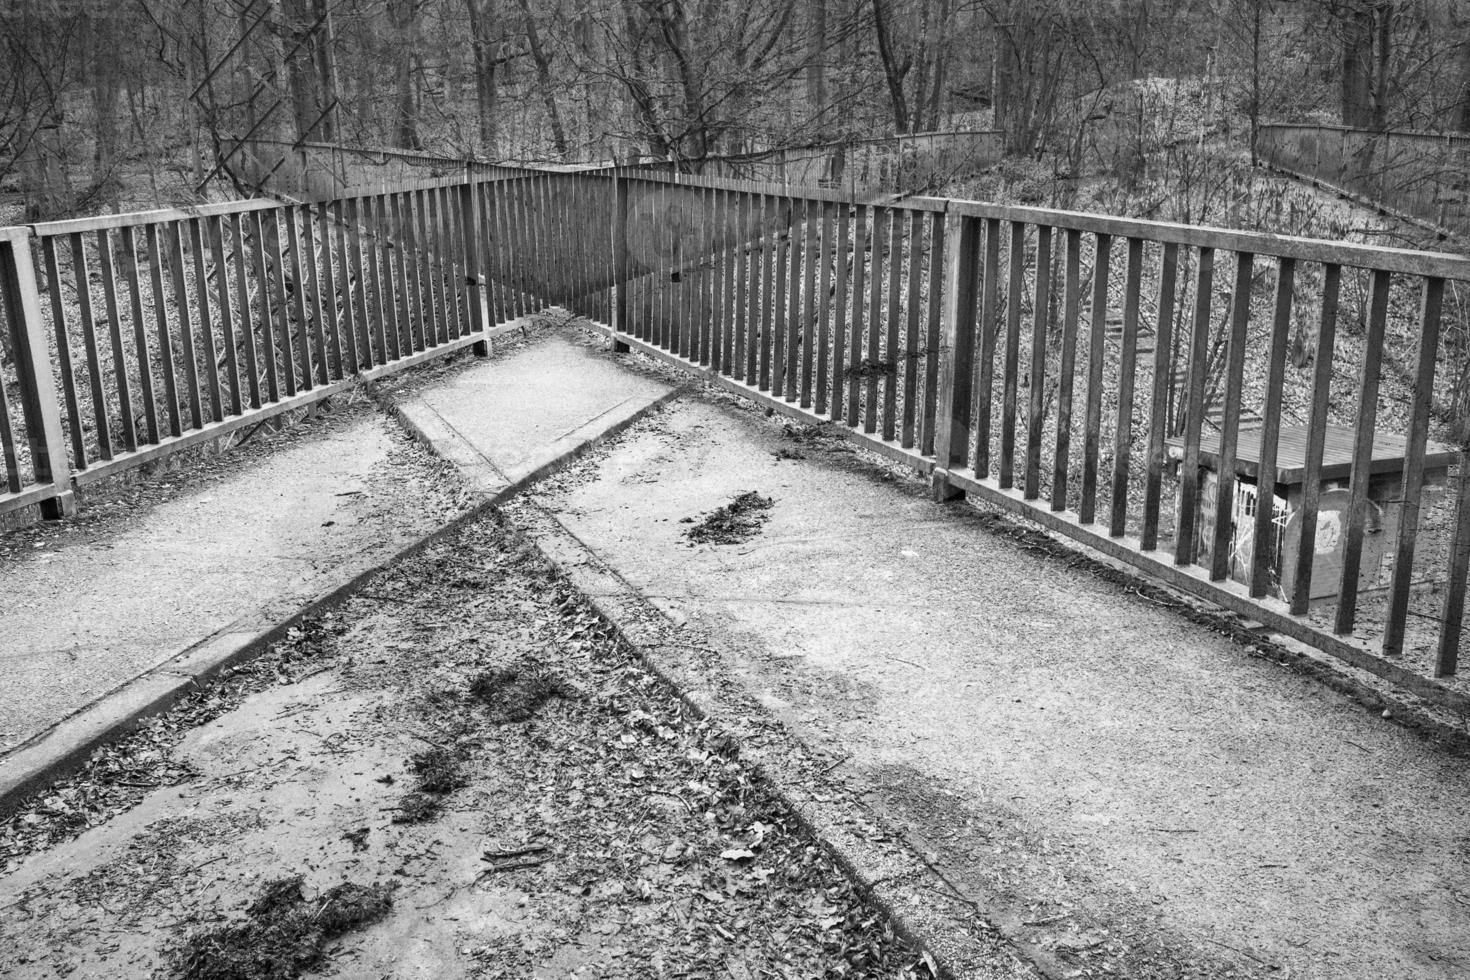 double exposure, crossing railings in black white photo